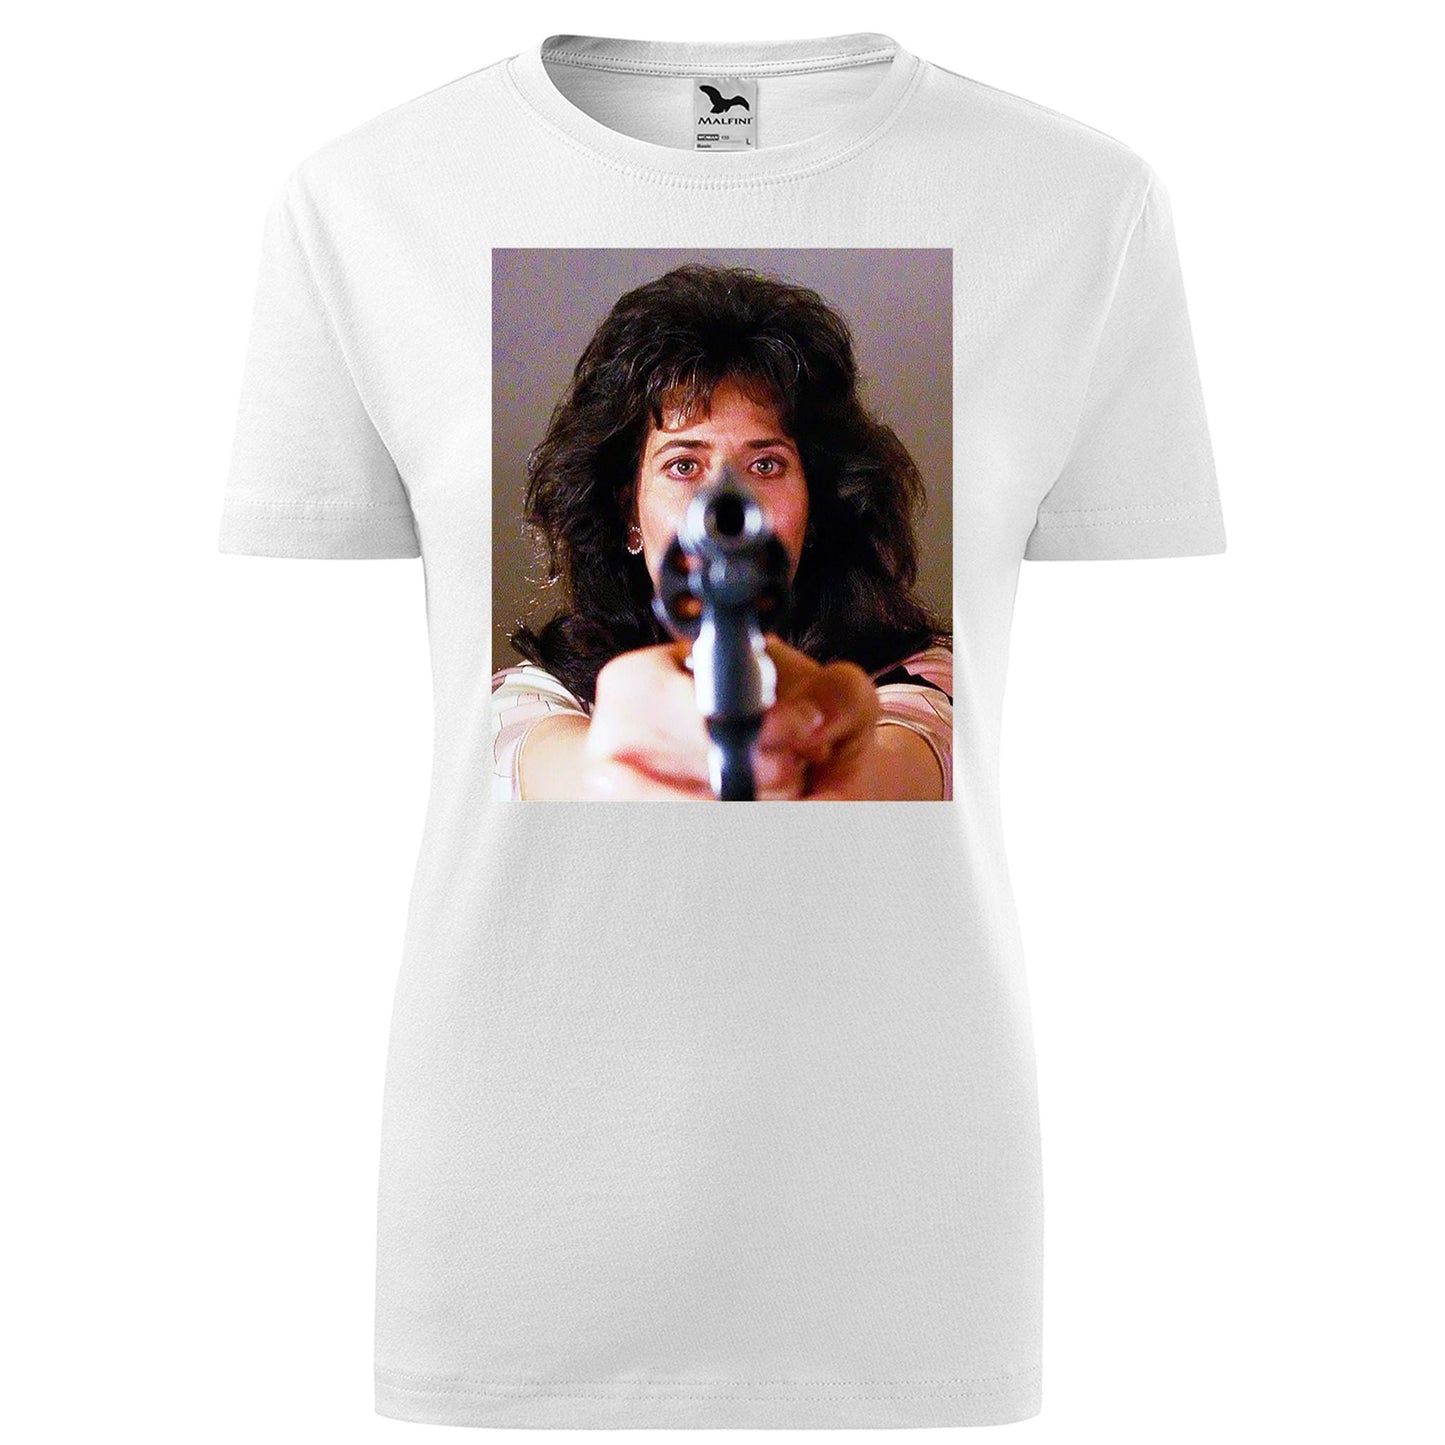 Goodfellas 2 t-shirt - rvdesignprint